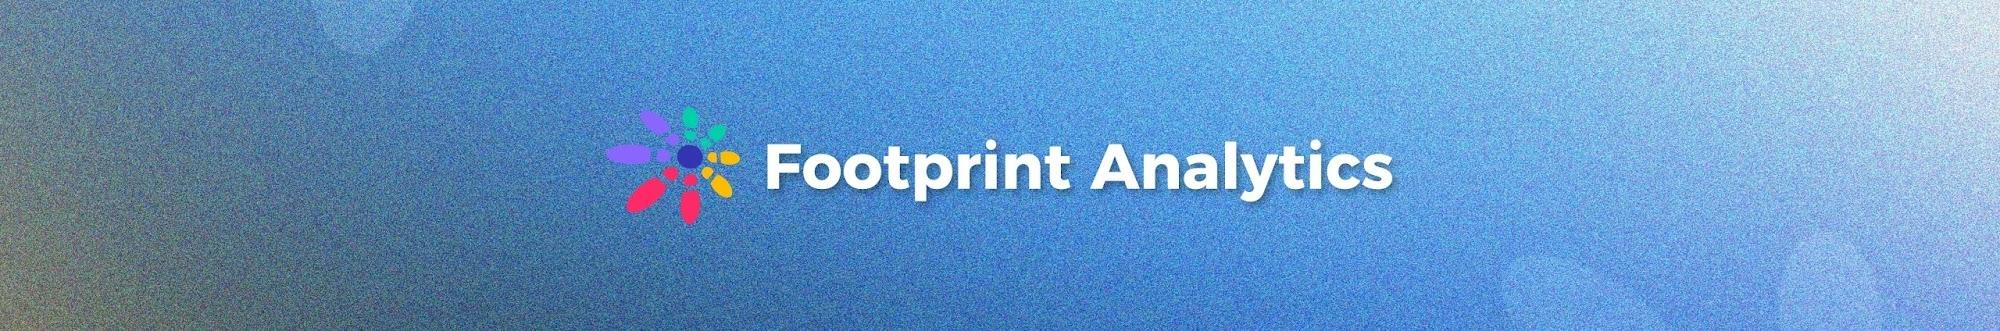 Footprint Analytics